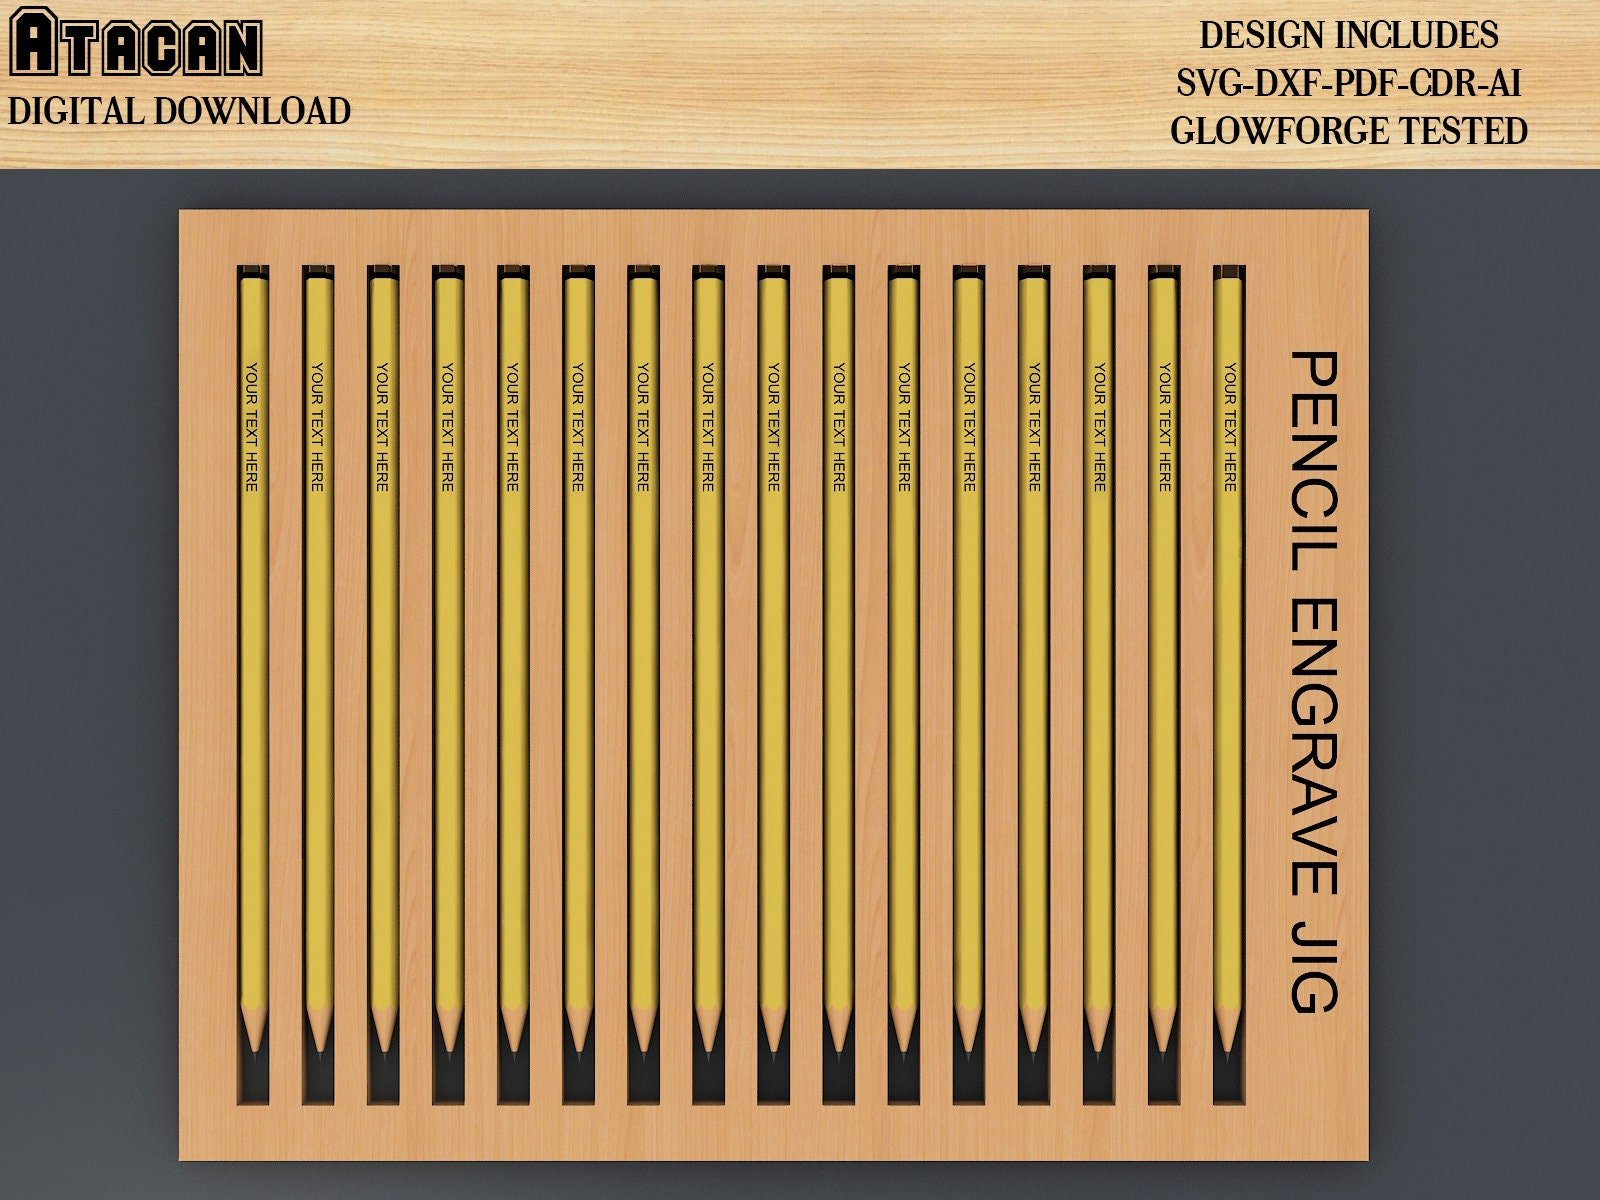 Custom Pencil Jig SVG File / Personalised Digital Pencil Laser Jig File / Easy to use Glowforge files and laser cut files 367